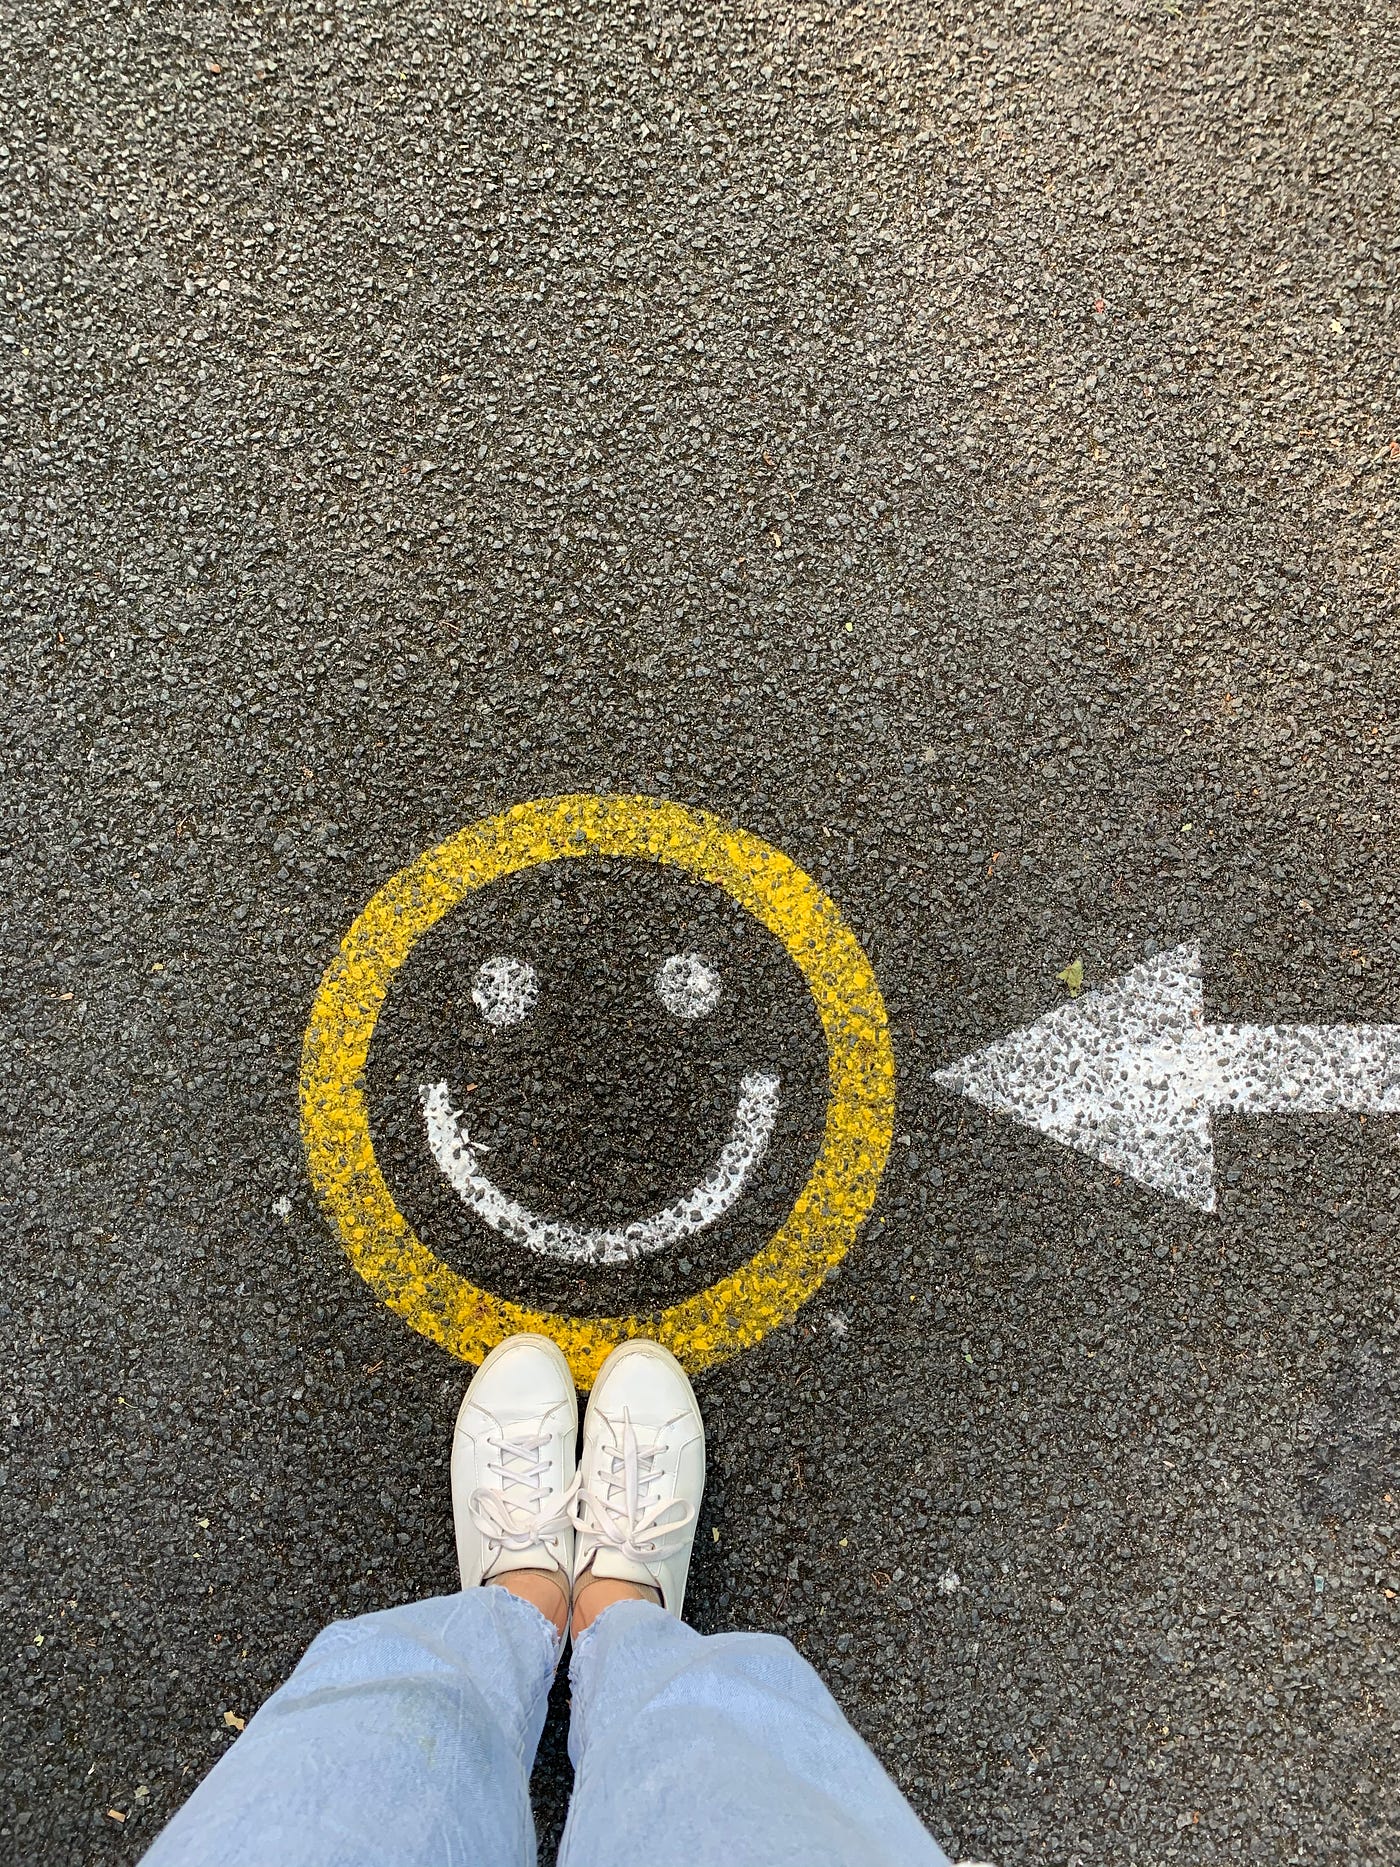 feet standing on a chalk smiley face on asphalt road